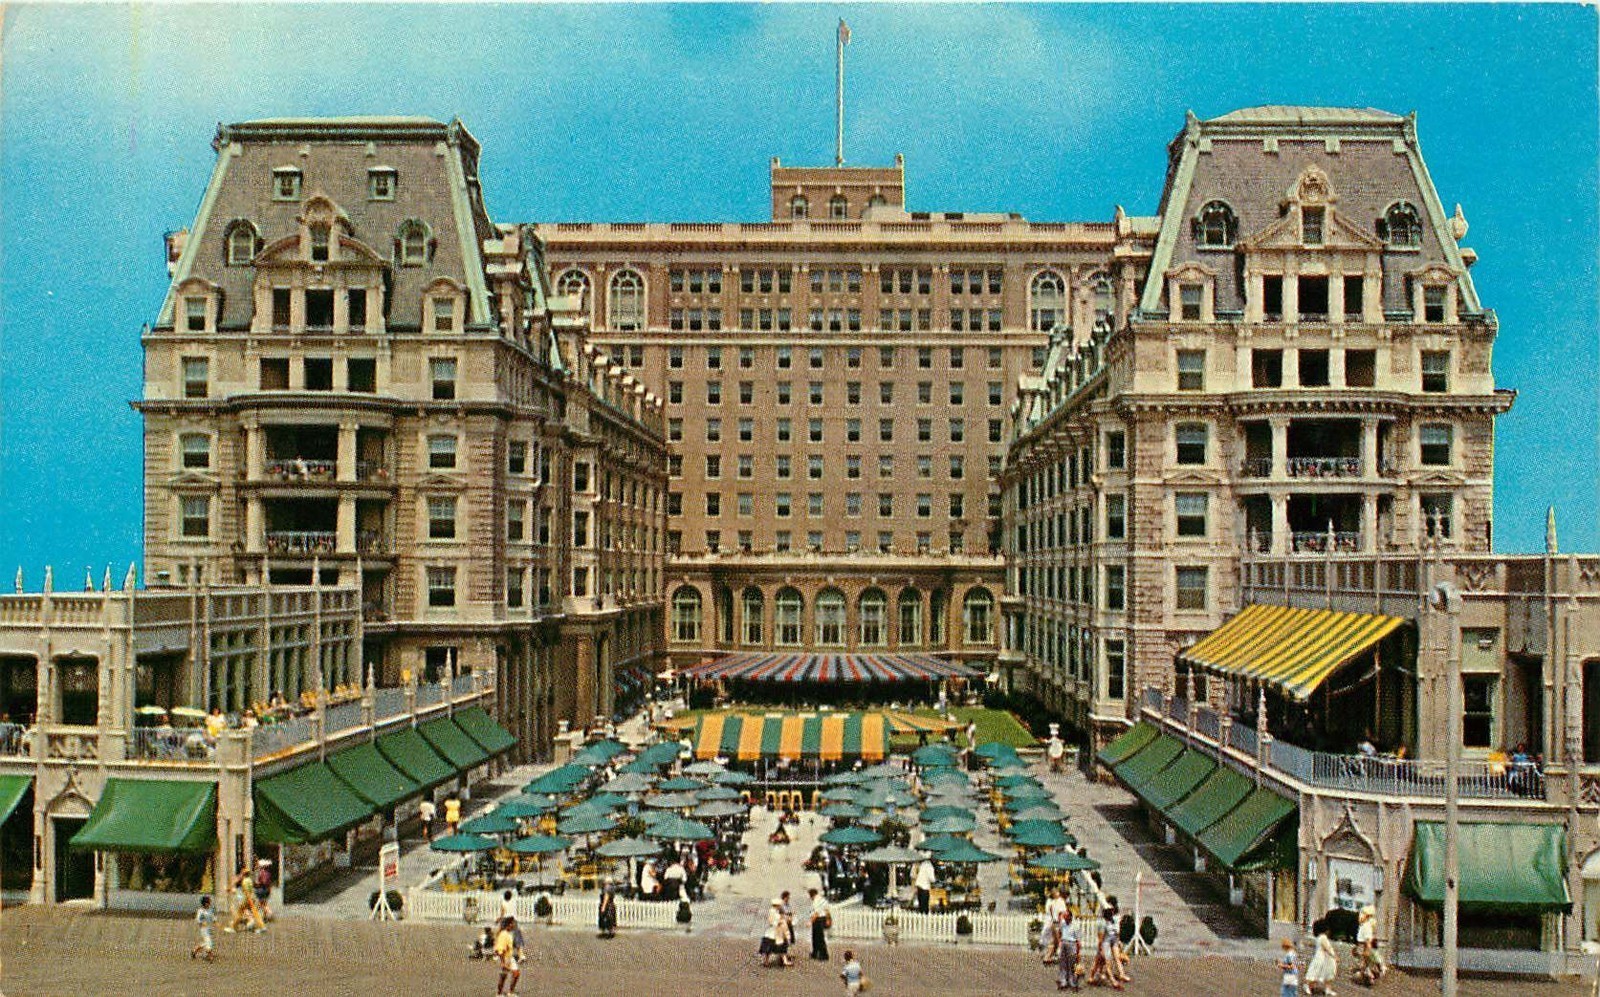 Atlantic City - Hotel Dennis - 1950s-60s